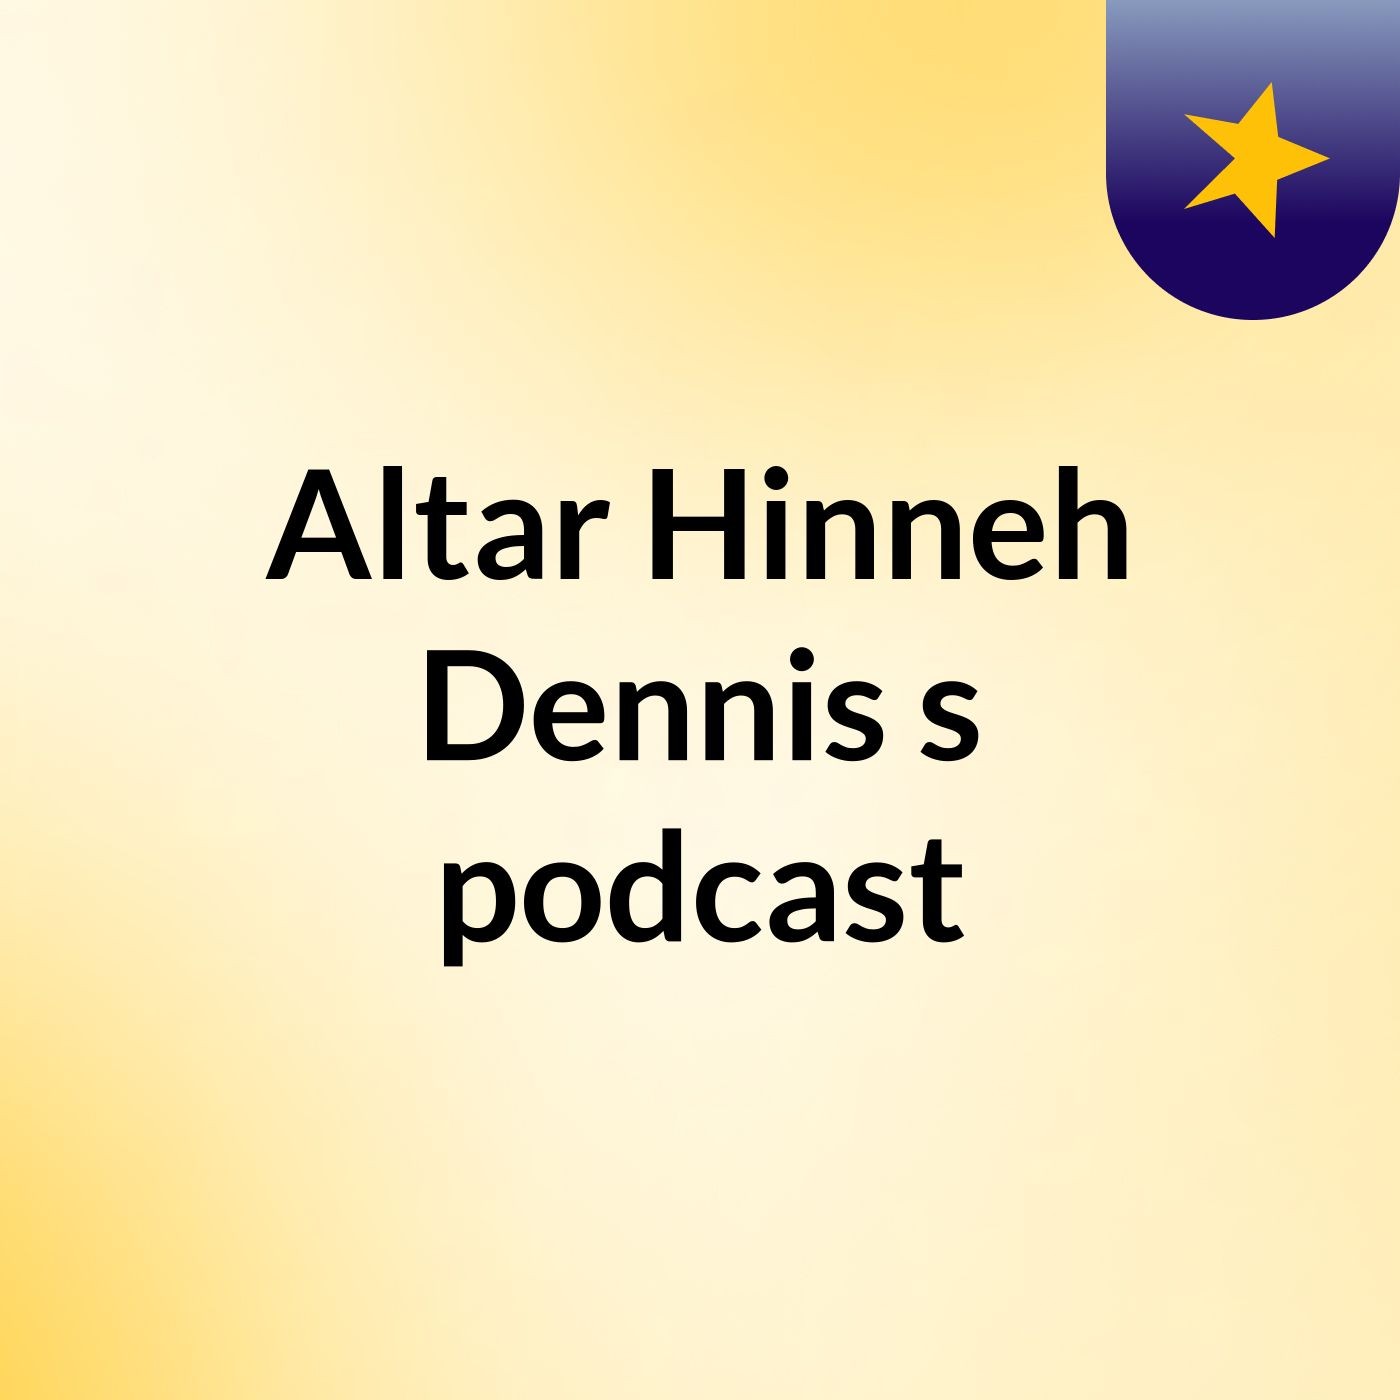 Altar Hinneh Dennis's podcast